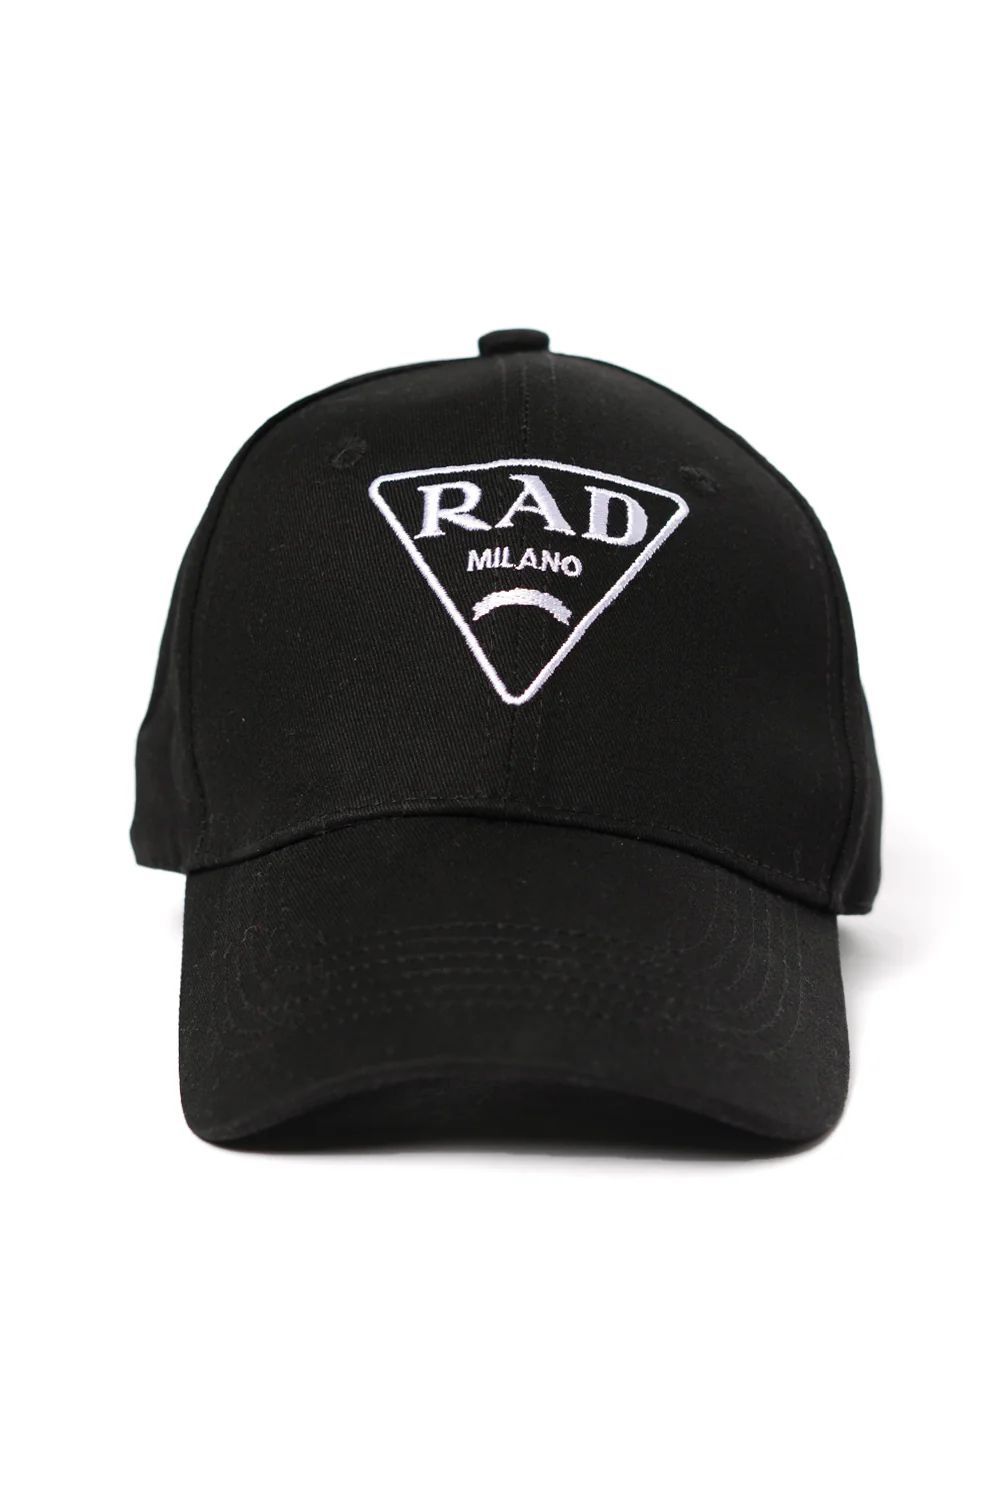 BALL CAP - Rad | Los Angeles Trading Co